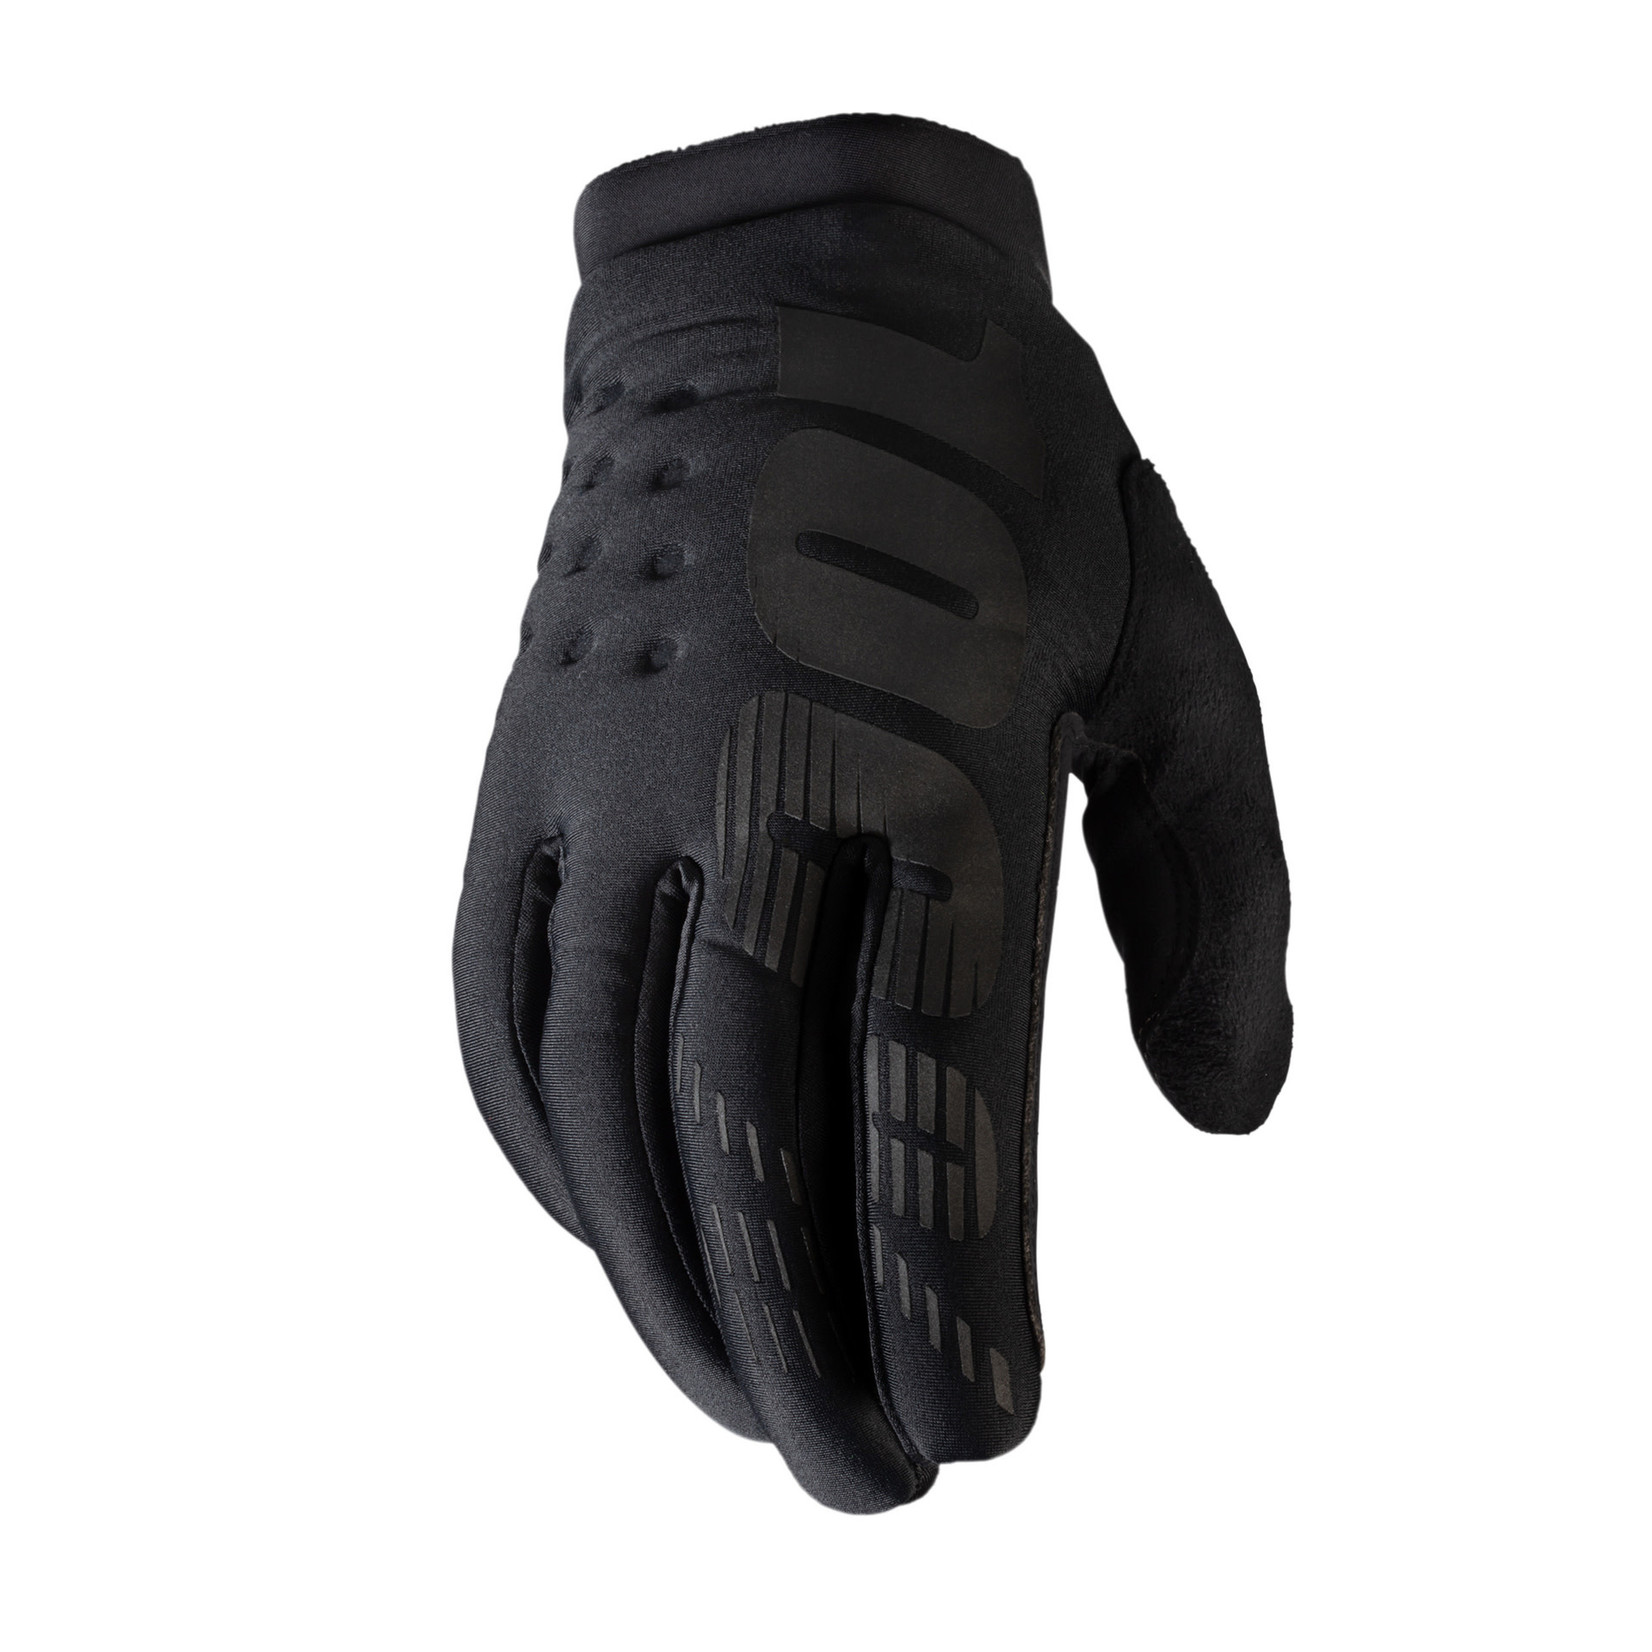 100 Percent 100% Brisker Bike Cycling Gloves - Black  - Silicone Printed